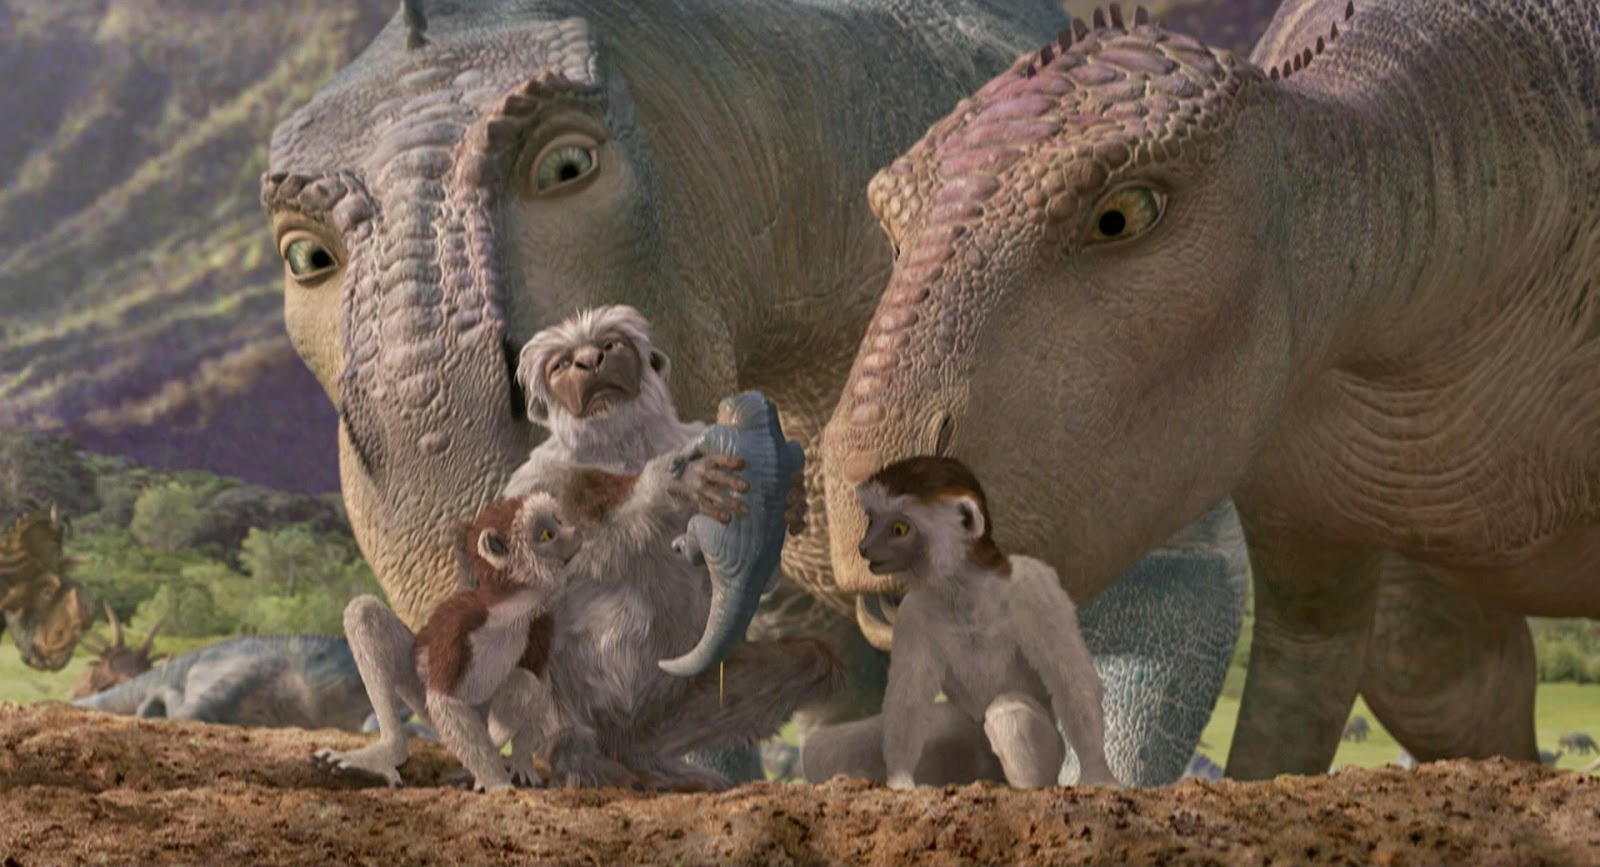 Dinosaur (2000)